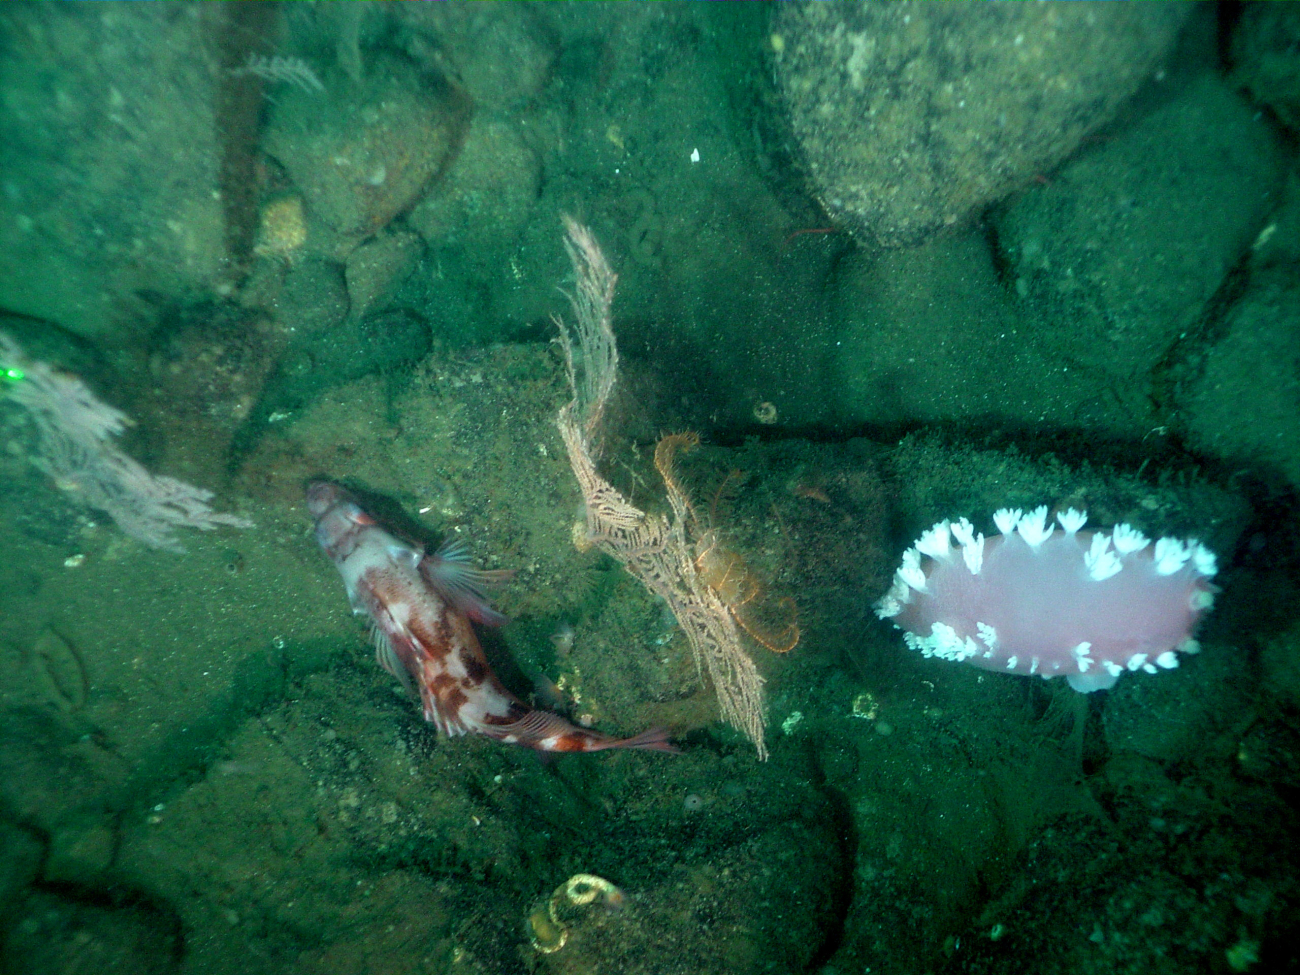 Rockfish and large holothurian